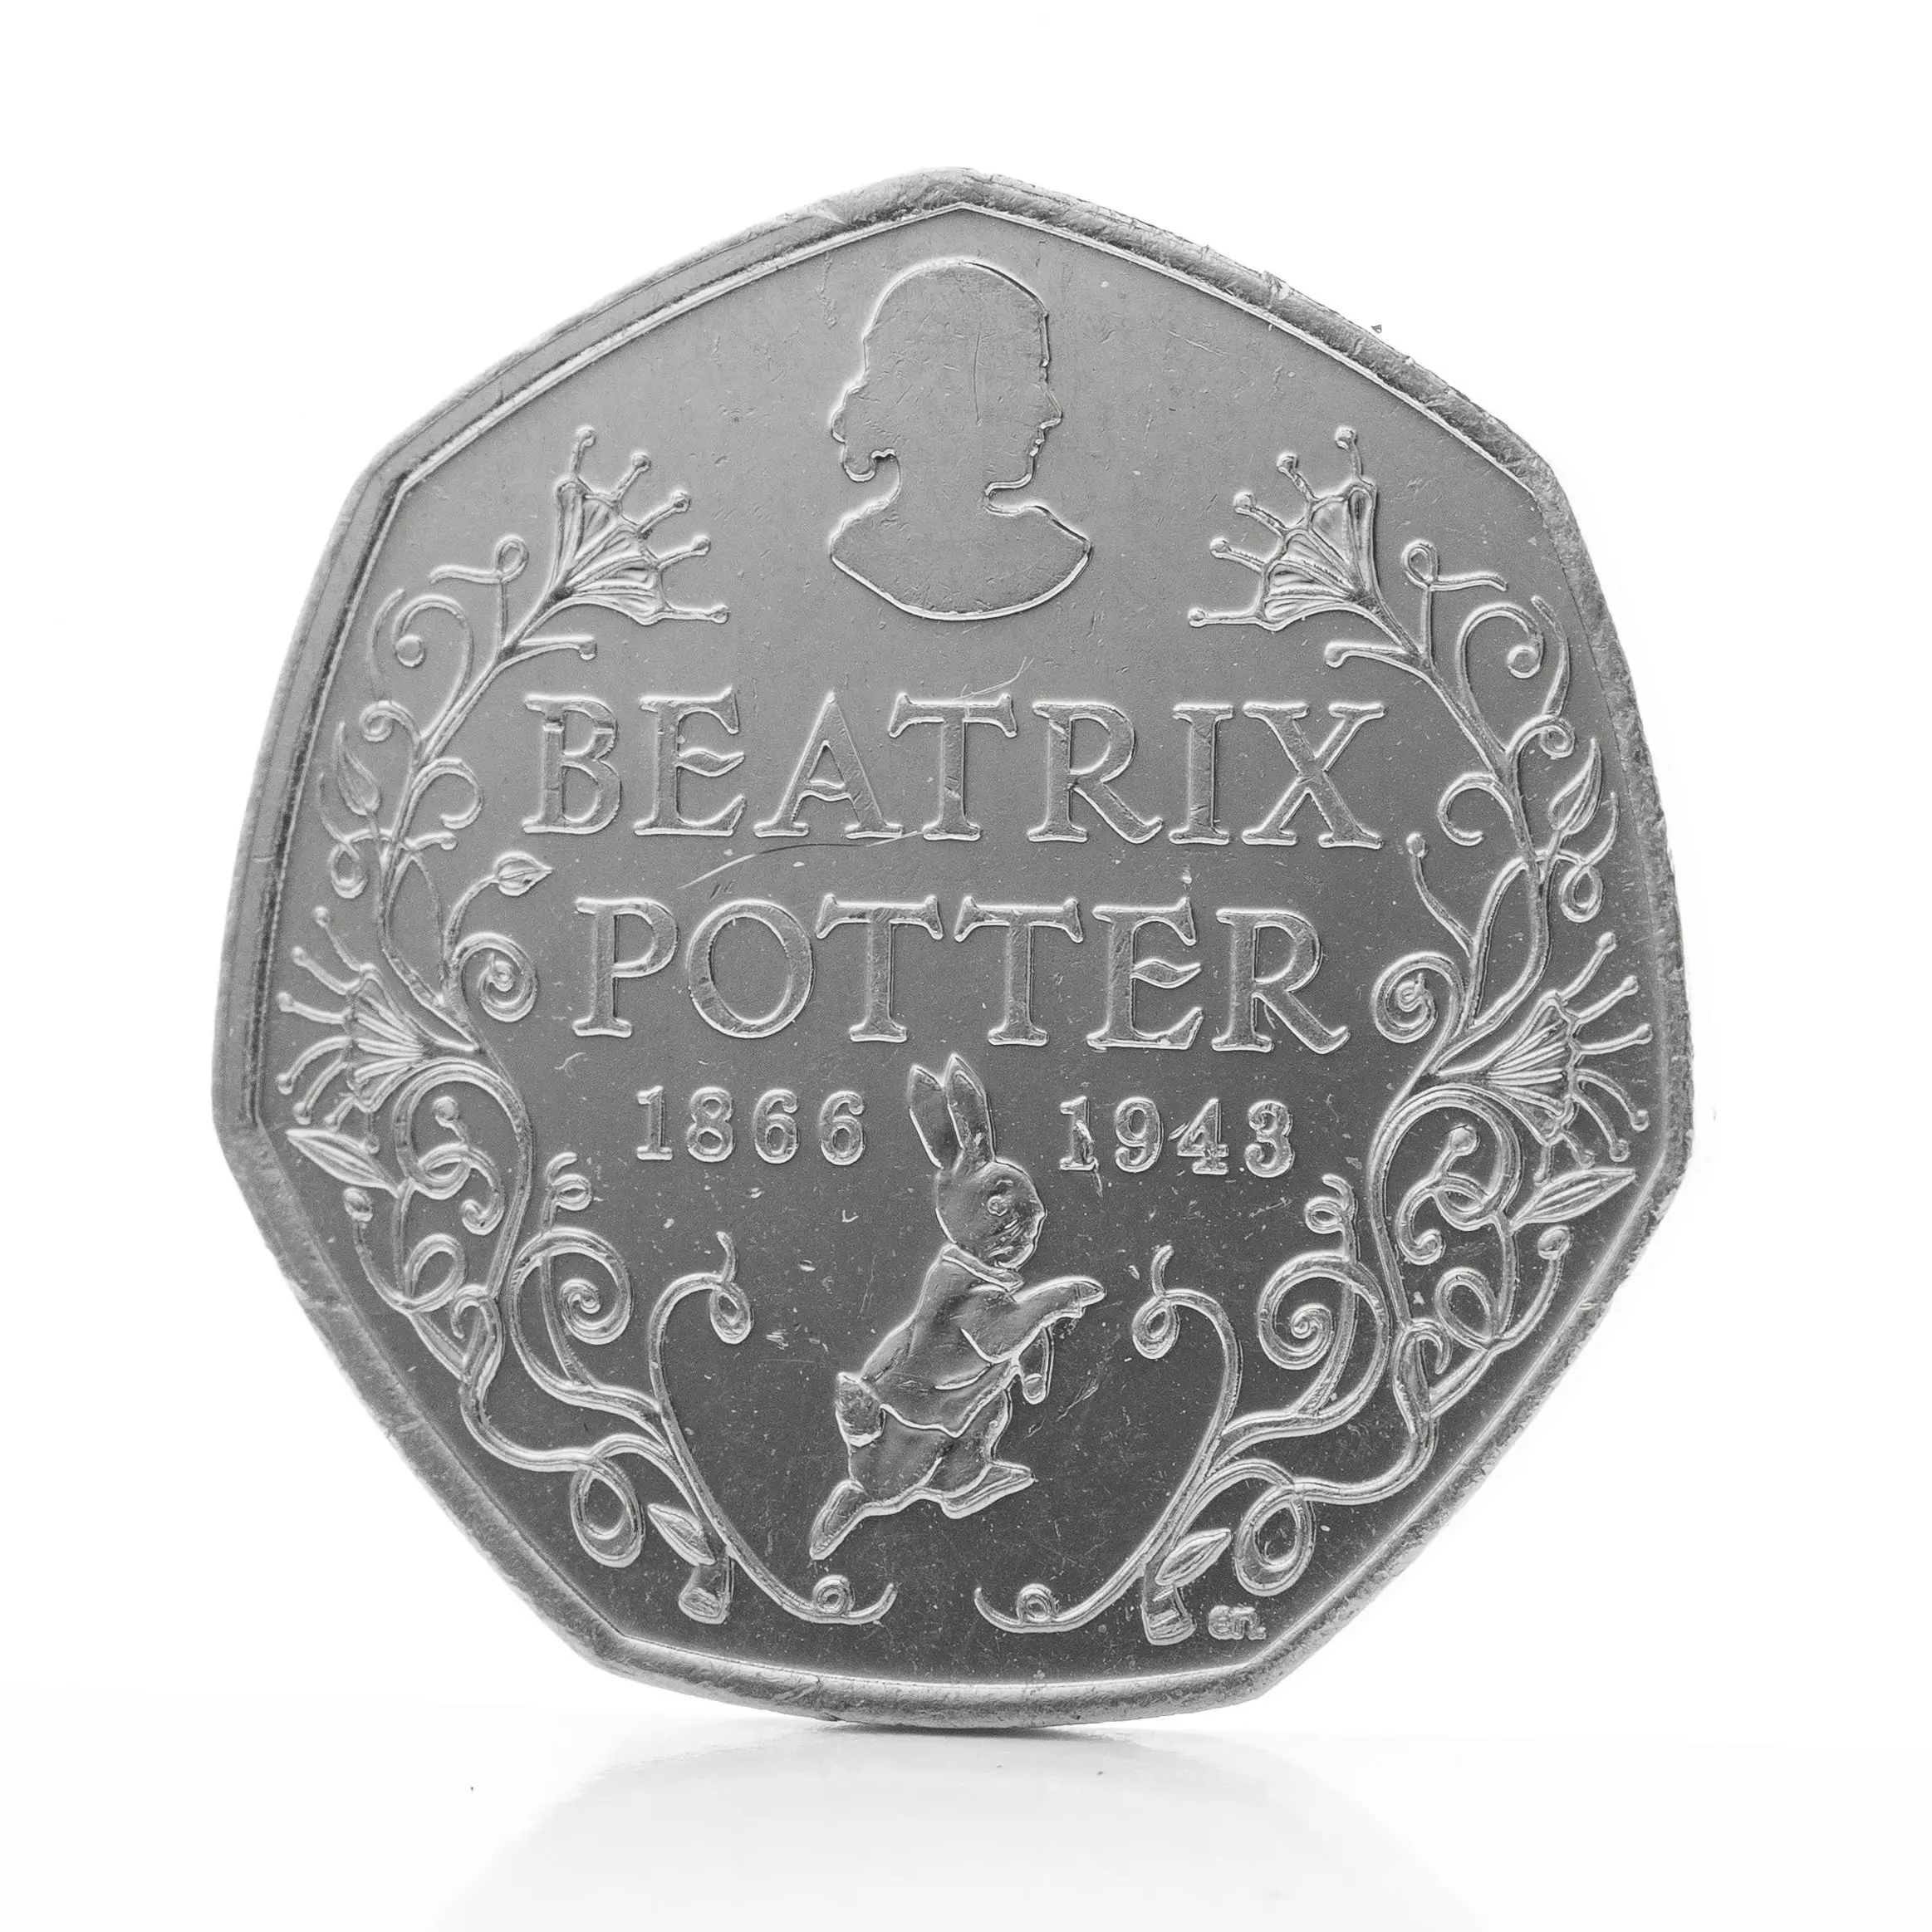 Beatrix Potter 50p Reverse Design